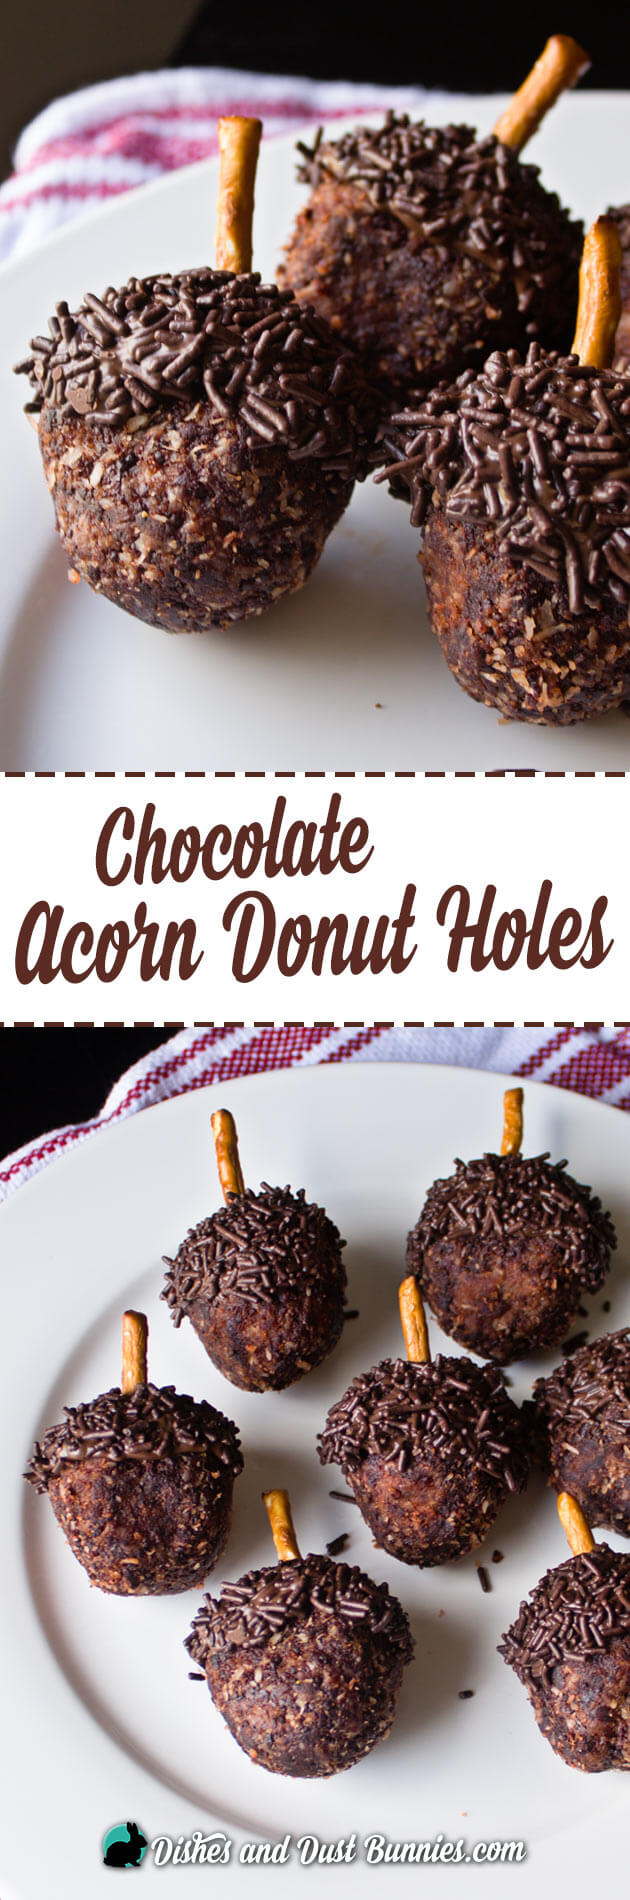 Chocolate Acorn Donut Holes from dishesanddustbunnies.com